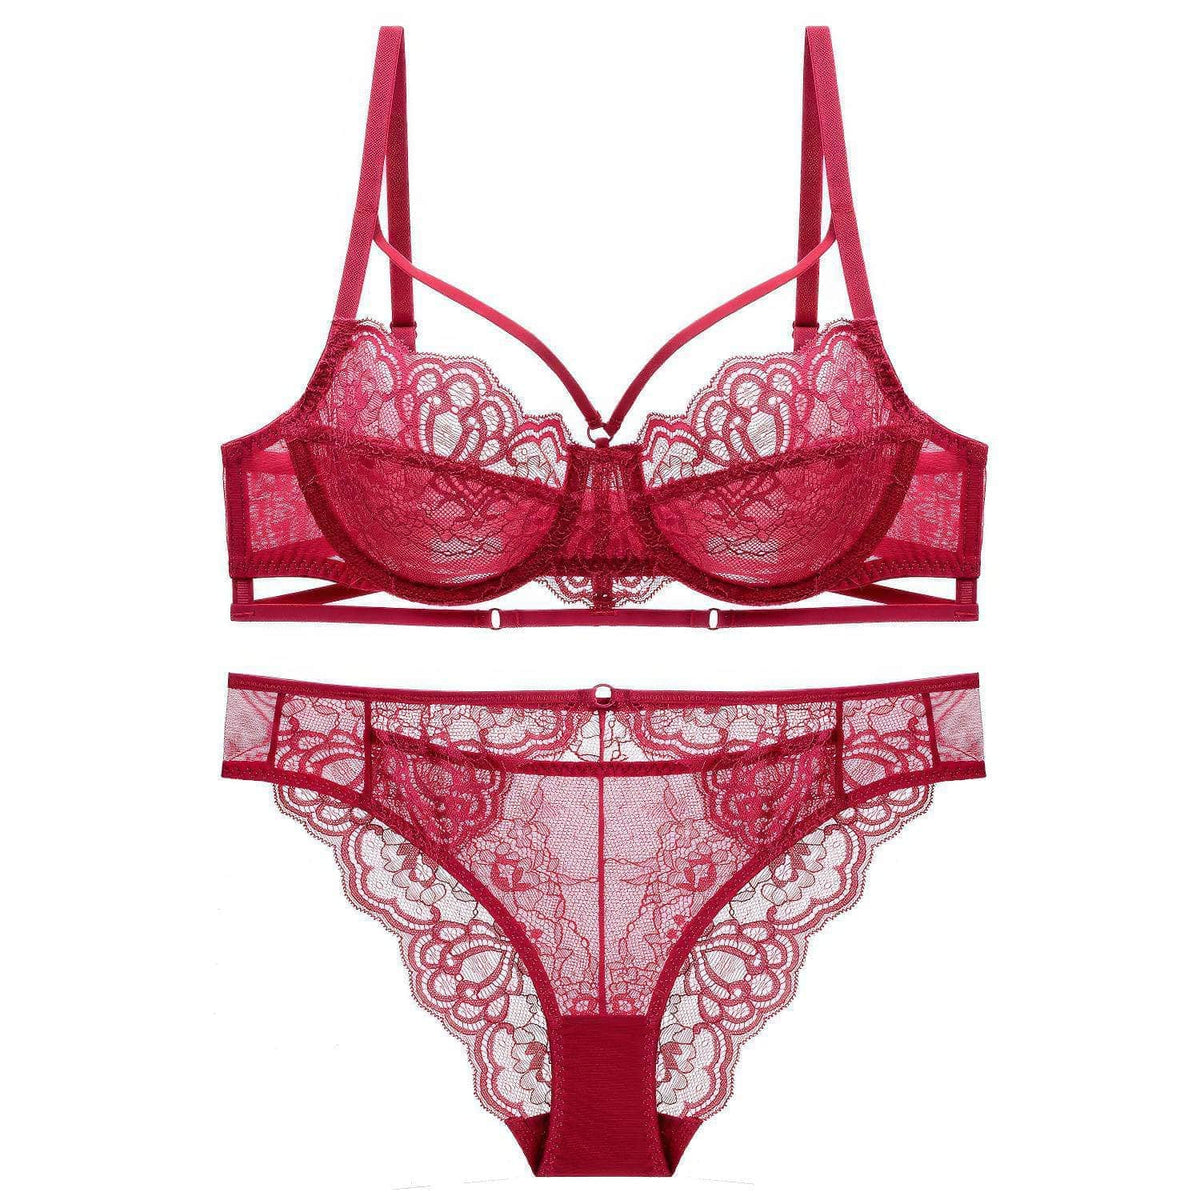 Fine Trimmed Lace Mesh Boudoir Bra Panty Set 70A / Red